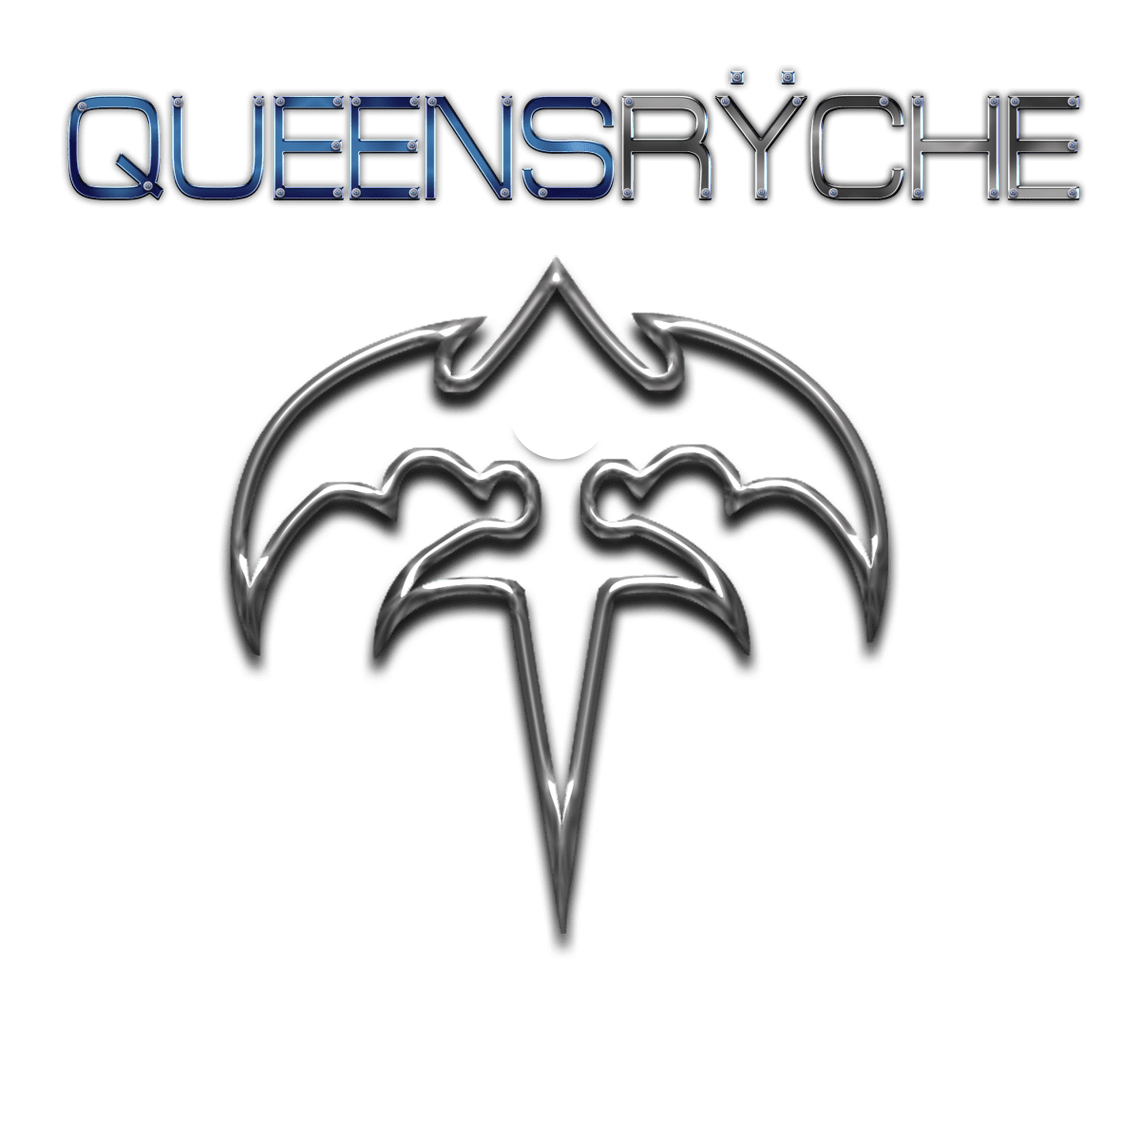 Queensryche Logo - Queensryche Metal Channel